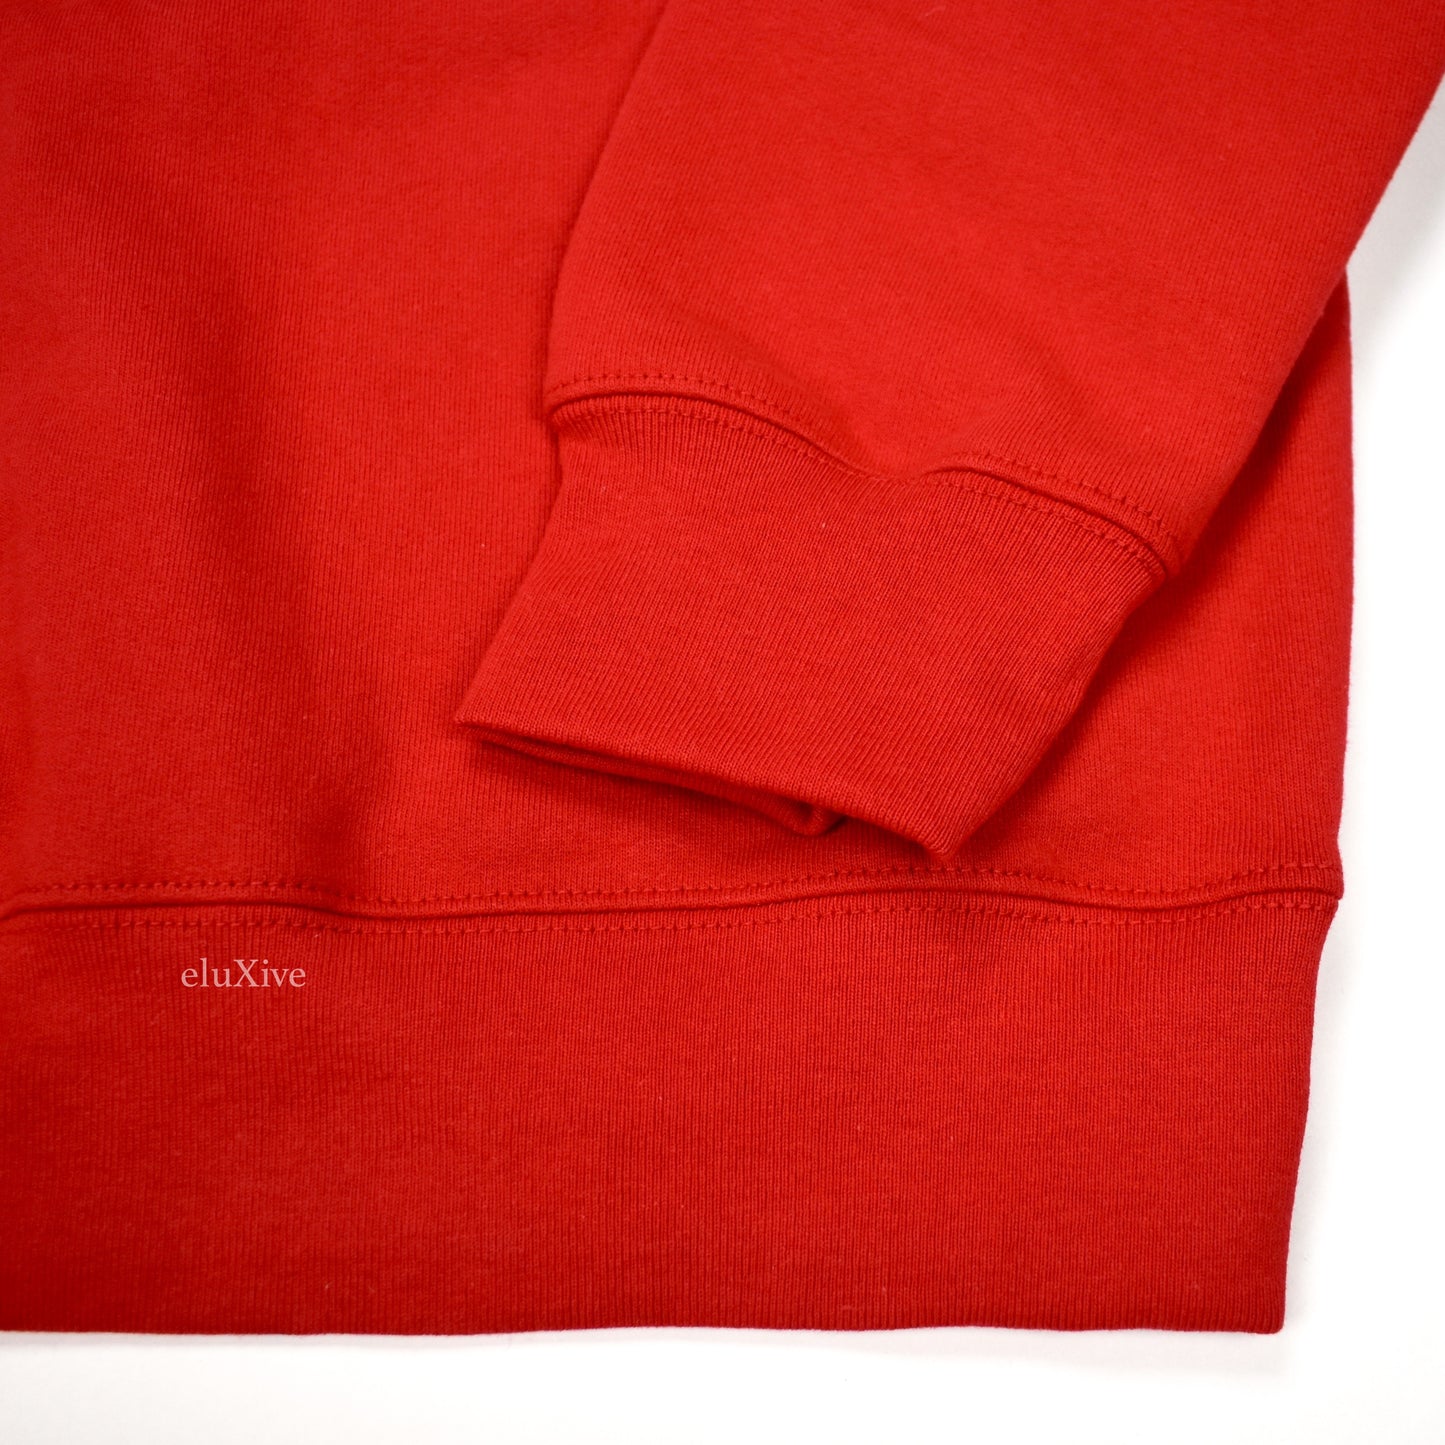 Supreme x Timberland - Red Logo Embroidered Sweatshirt